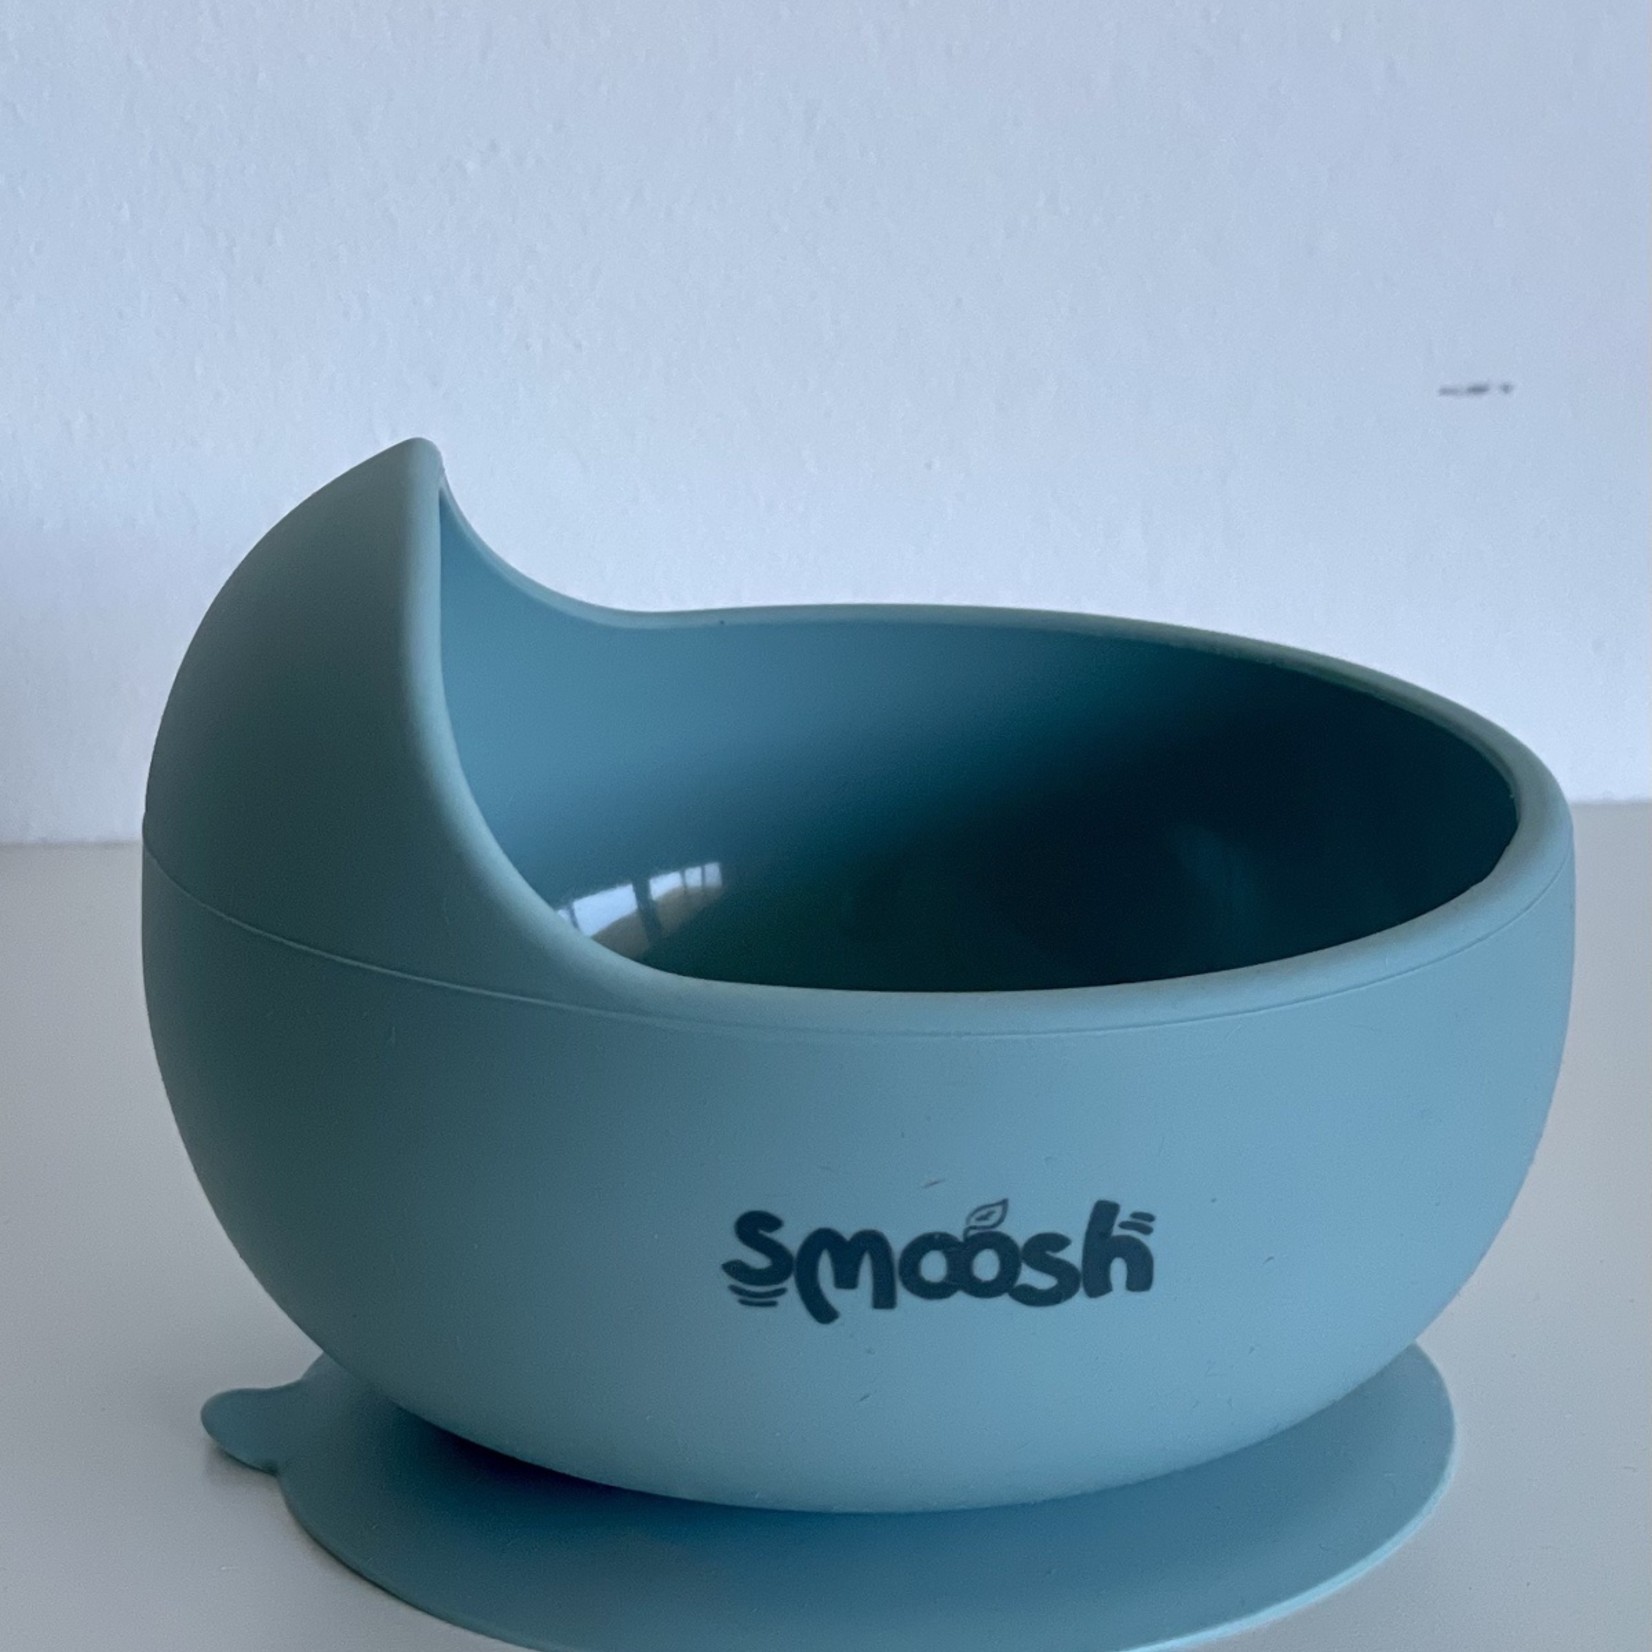 Brands4kids SMOOSH Cuddle Bowl